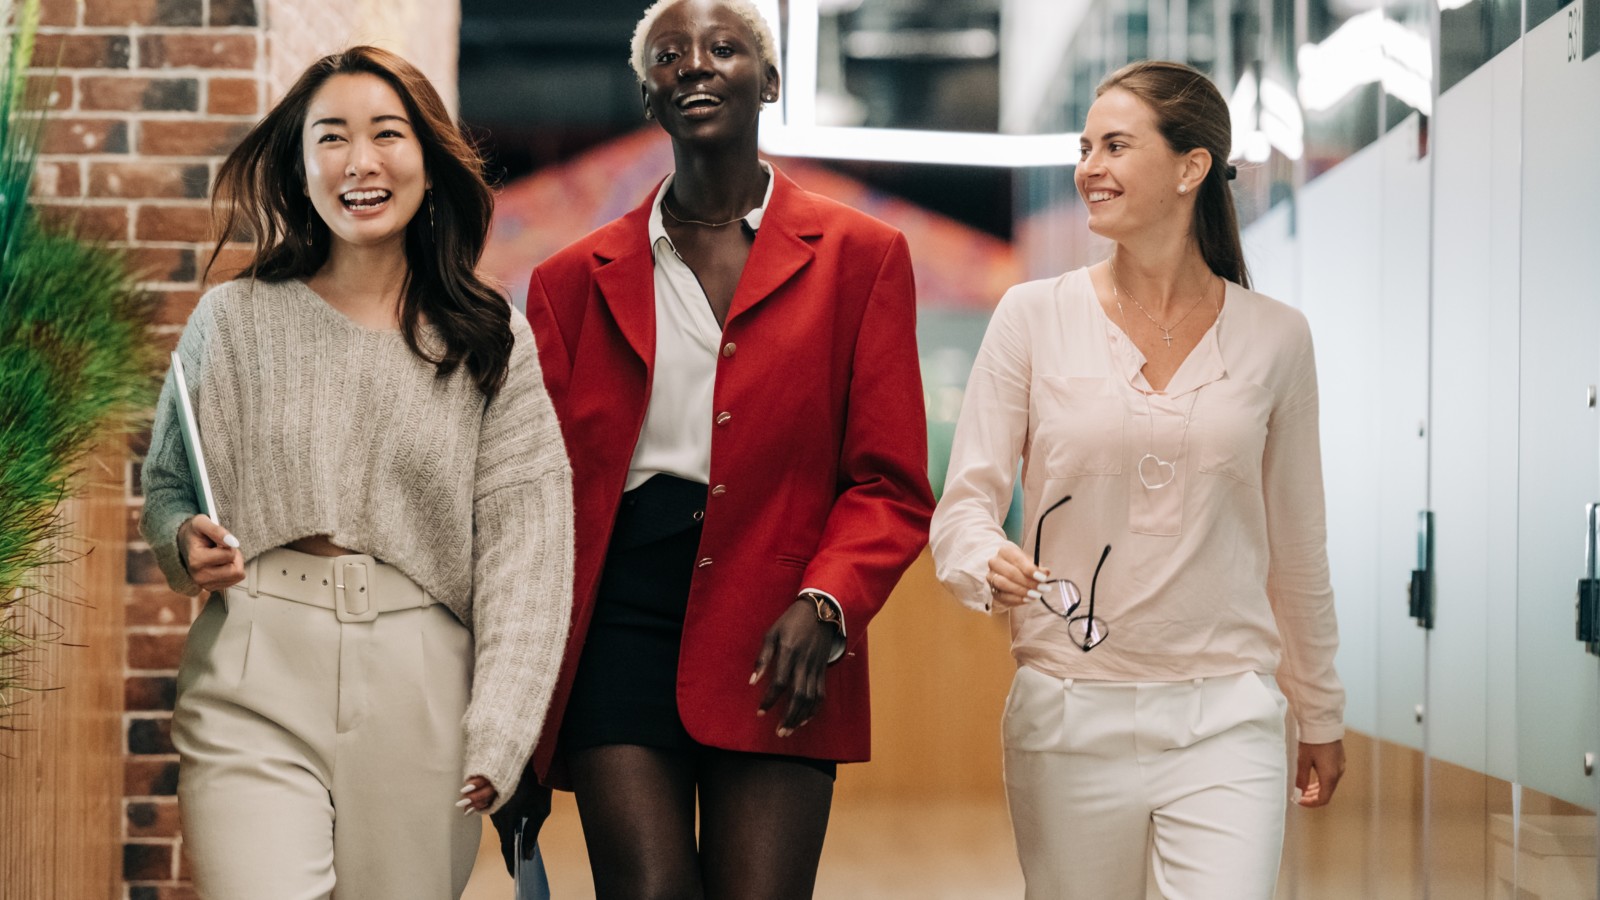 Three professional women walking side-by-side smiling